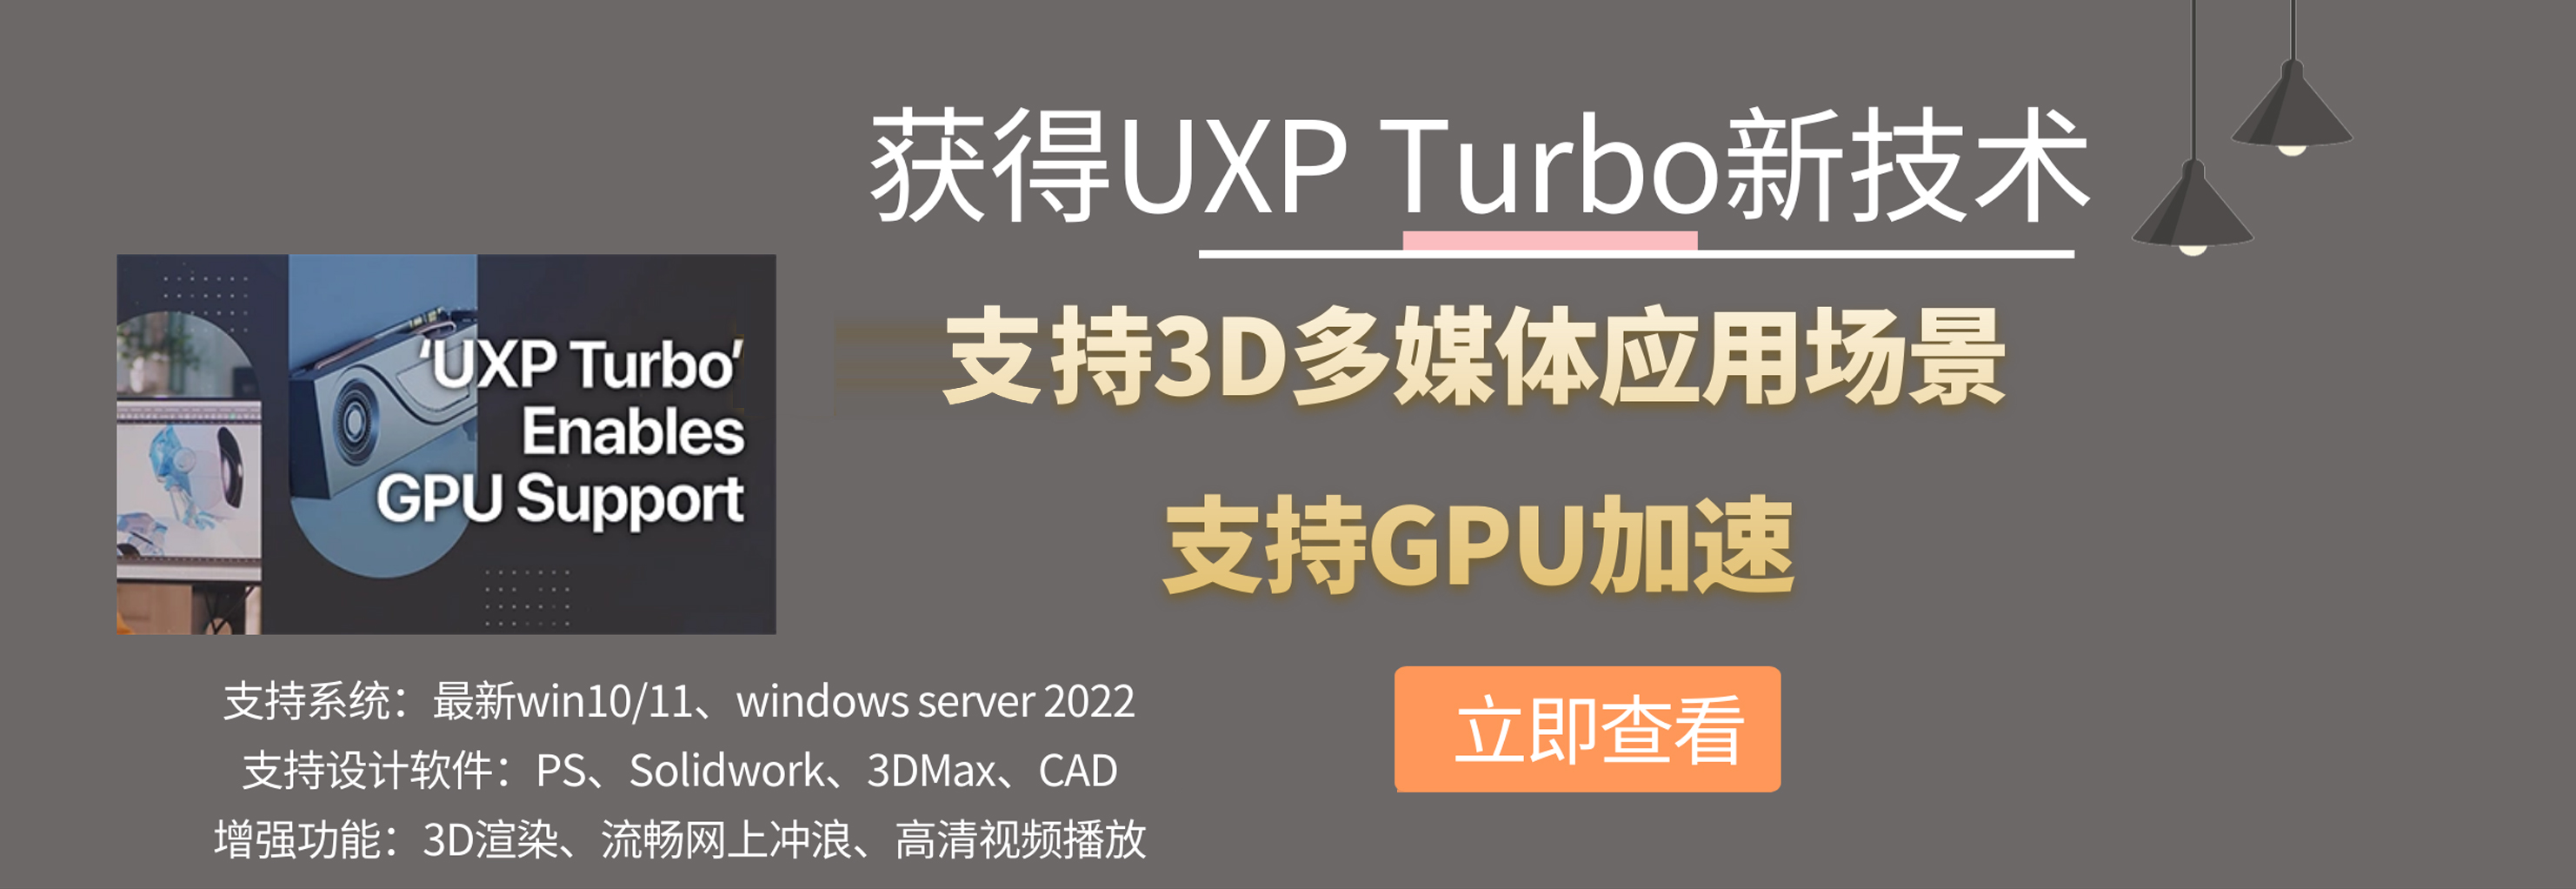 UXP Turbo新协议